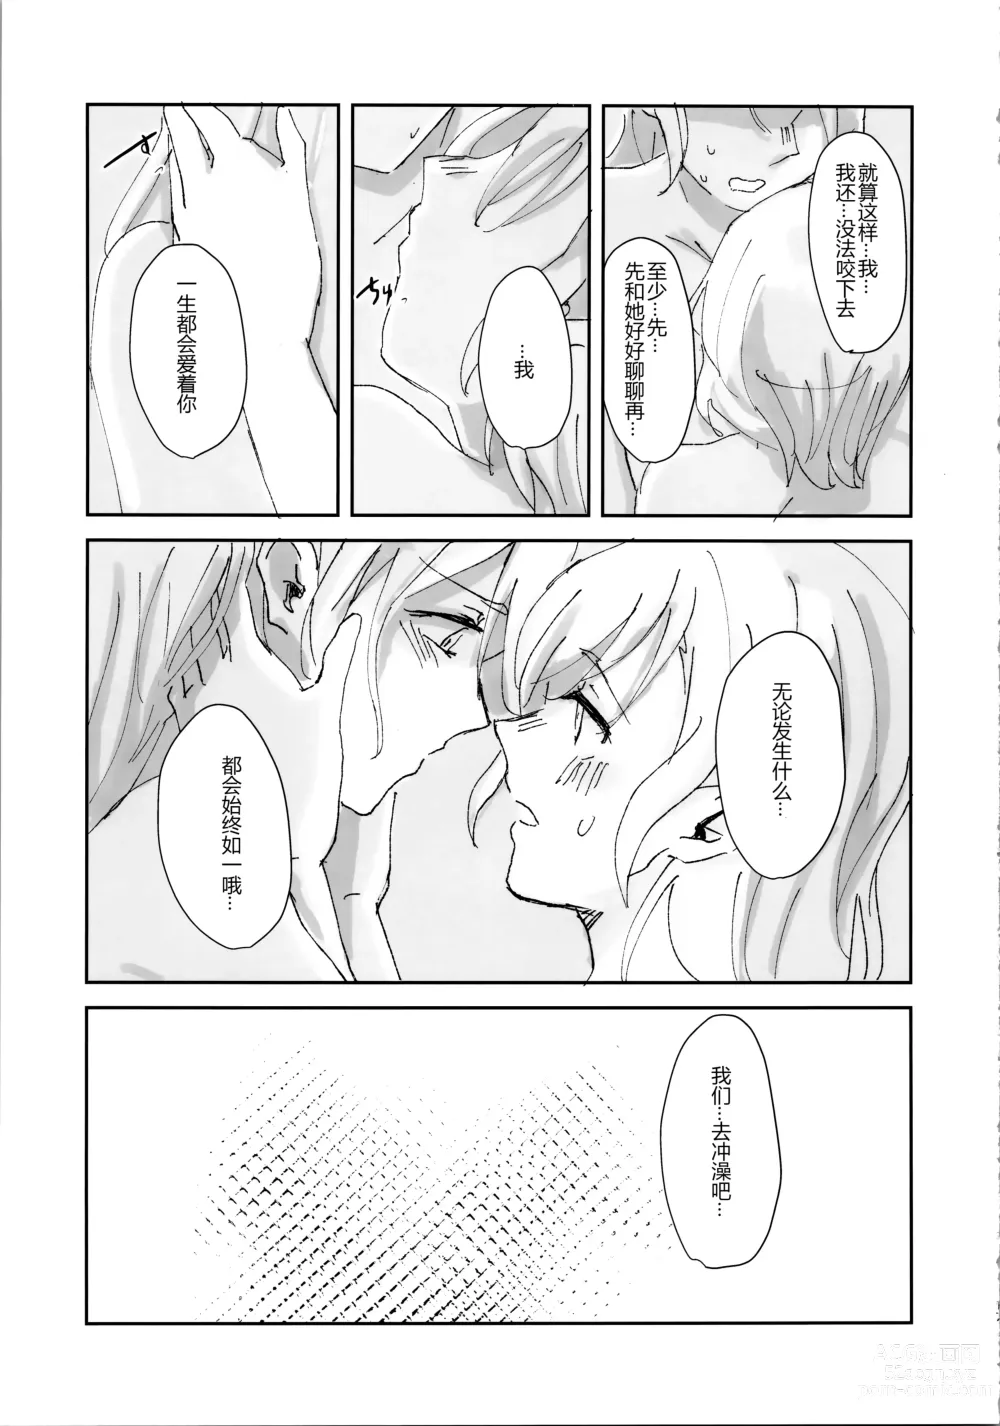 Page 17 of doujinshi 只要爱着彼此就好